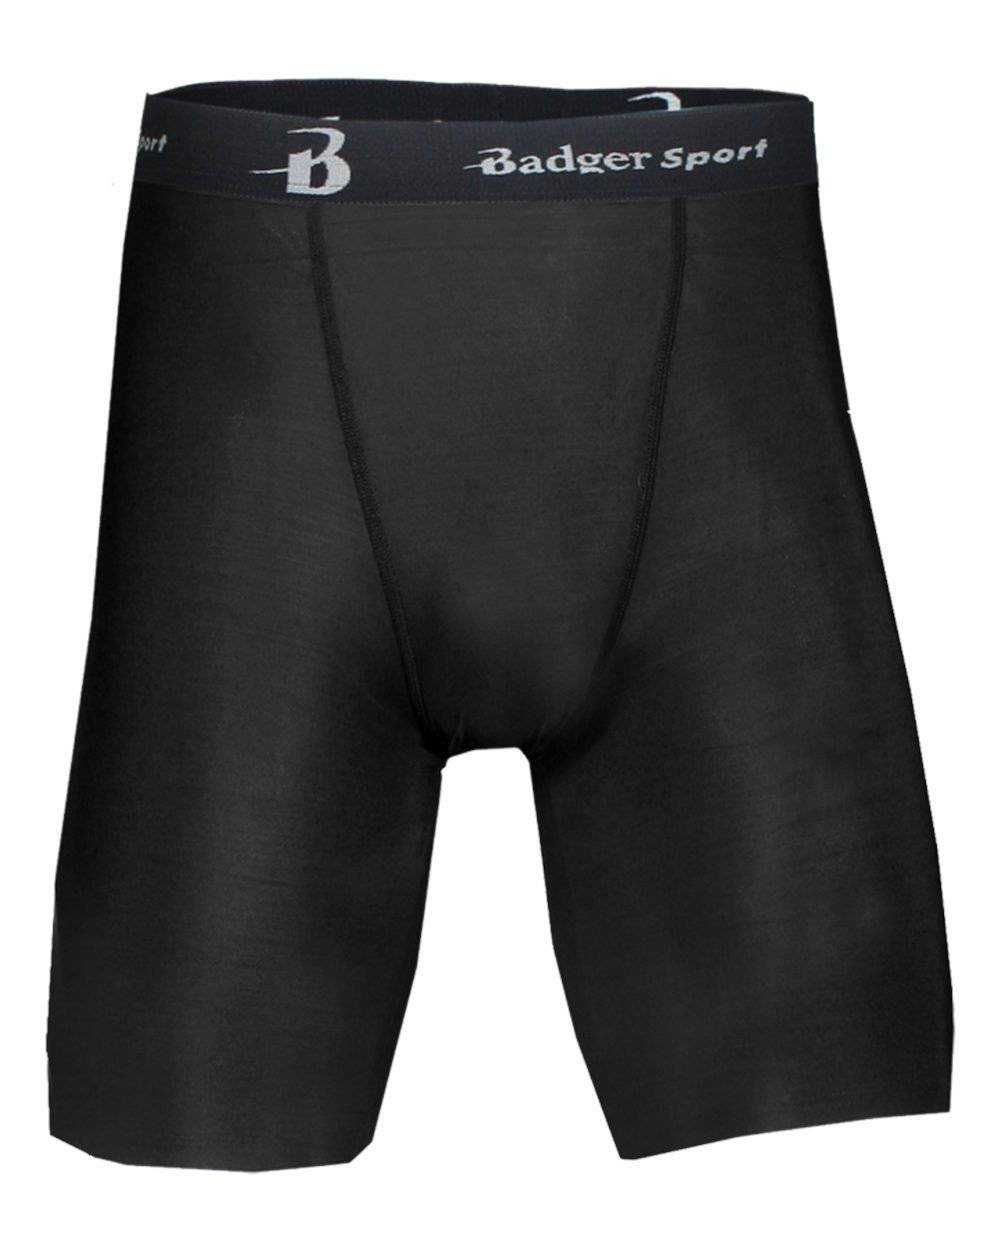 Badger Sport 4607 B-Fit Compression Short - Black - HIT a Double - 1